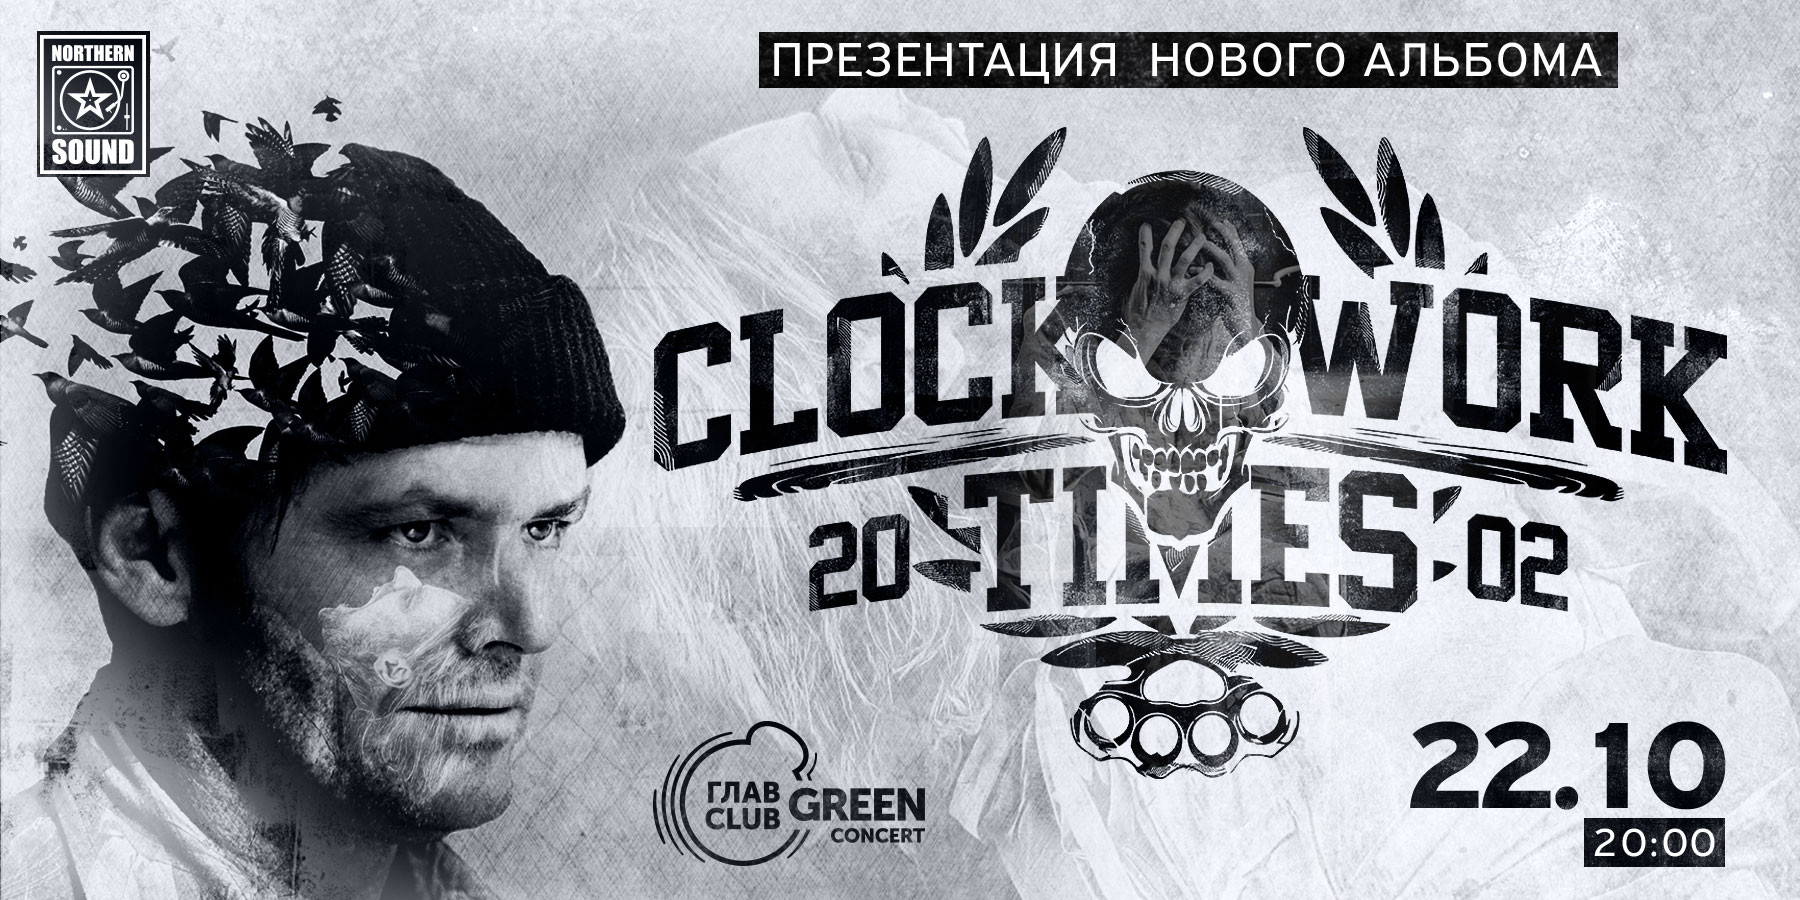 Clockwork Times